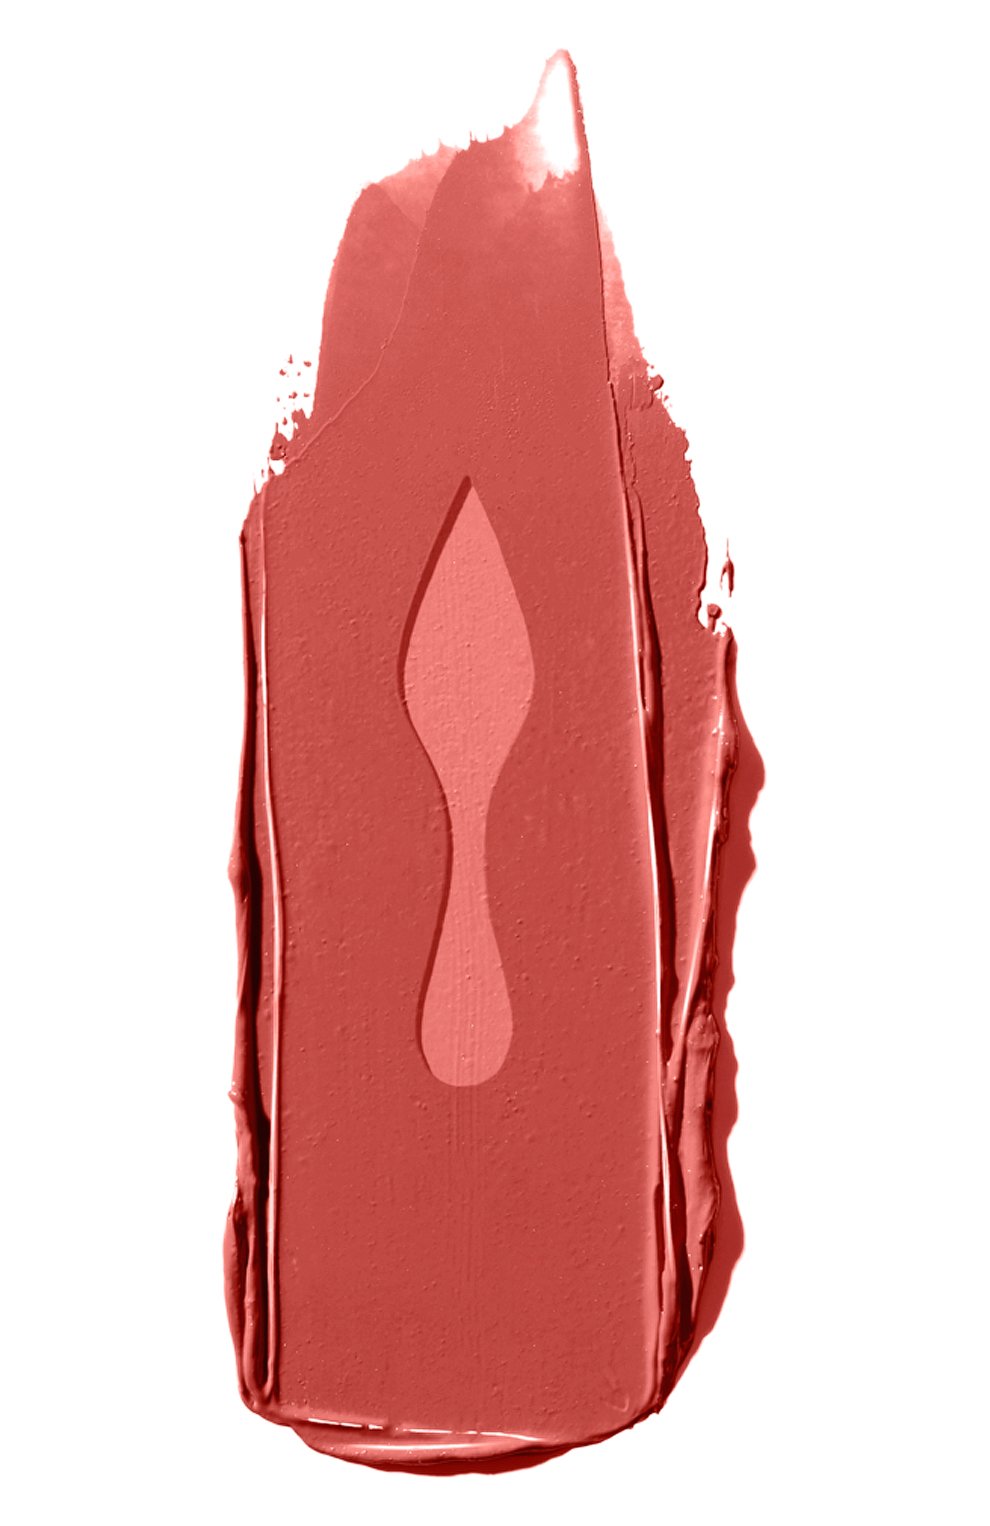 Помада дл�я губ с атласным блеском rouge louboutin silky satin on the go, оттенок bobo blush CHRISTIAN LOUBOUTIN  цвета, арт. 8435415067010 | Фото 2 (Финишное покрытие: Сатиновый)